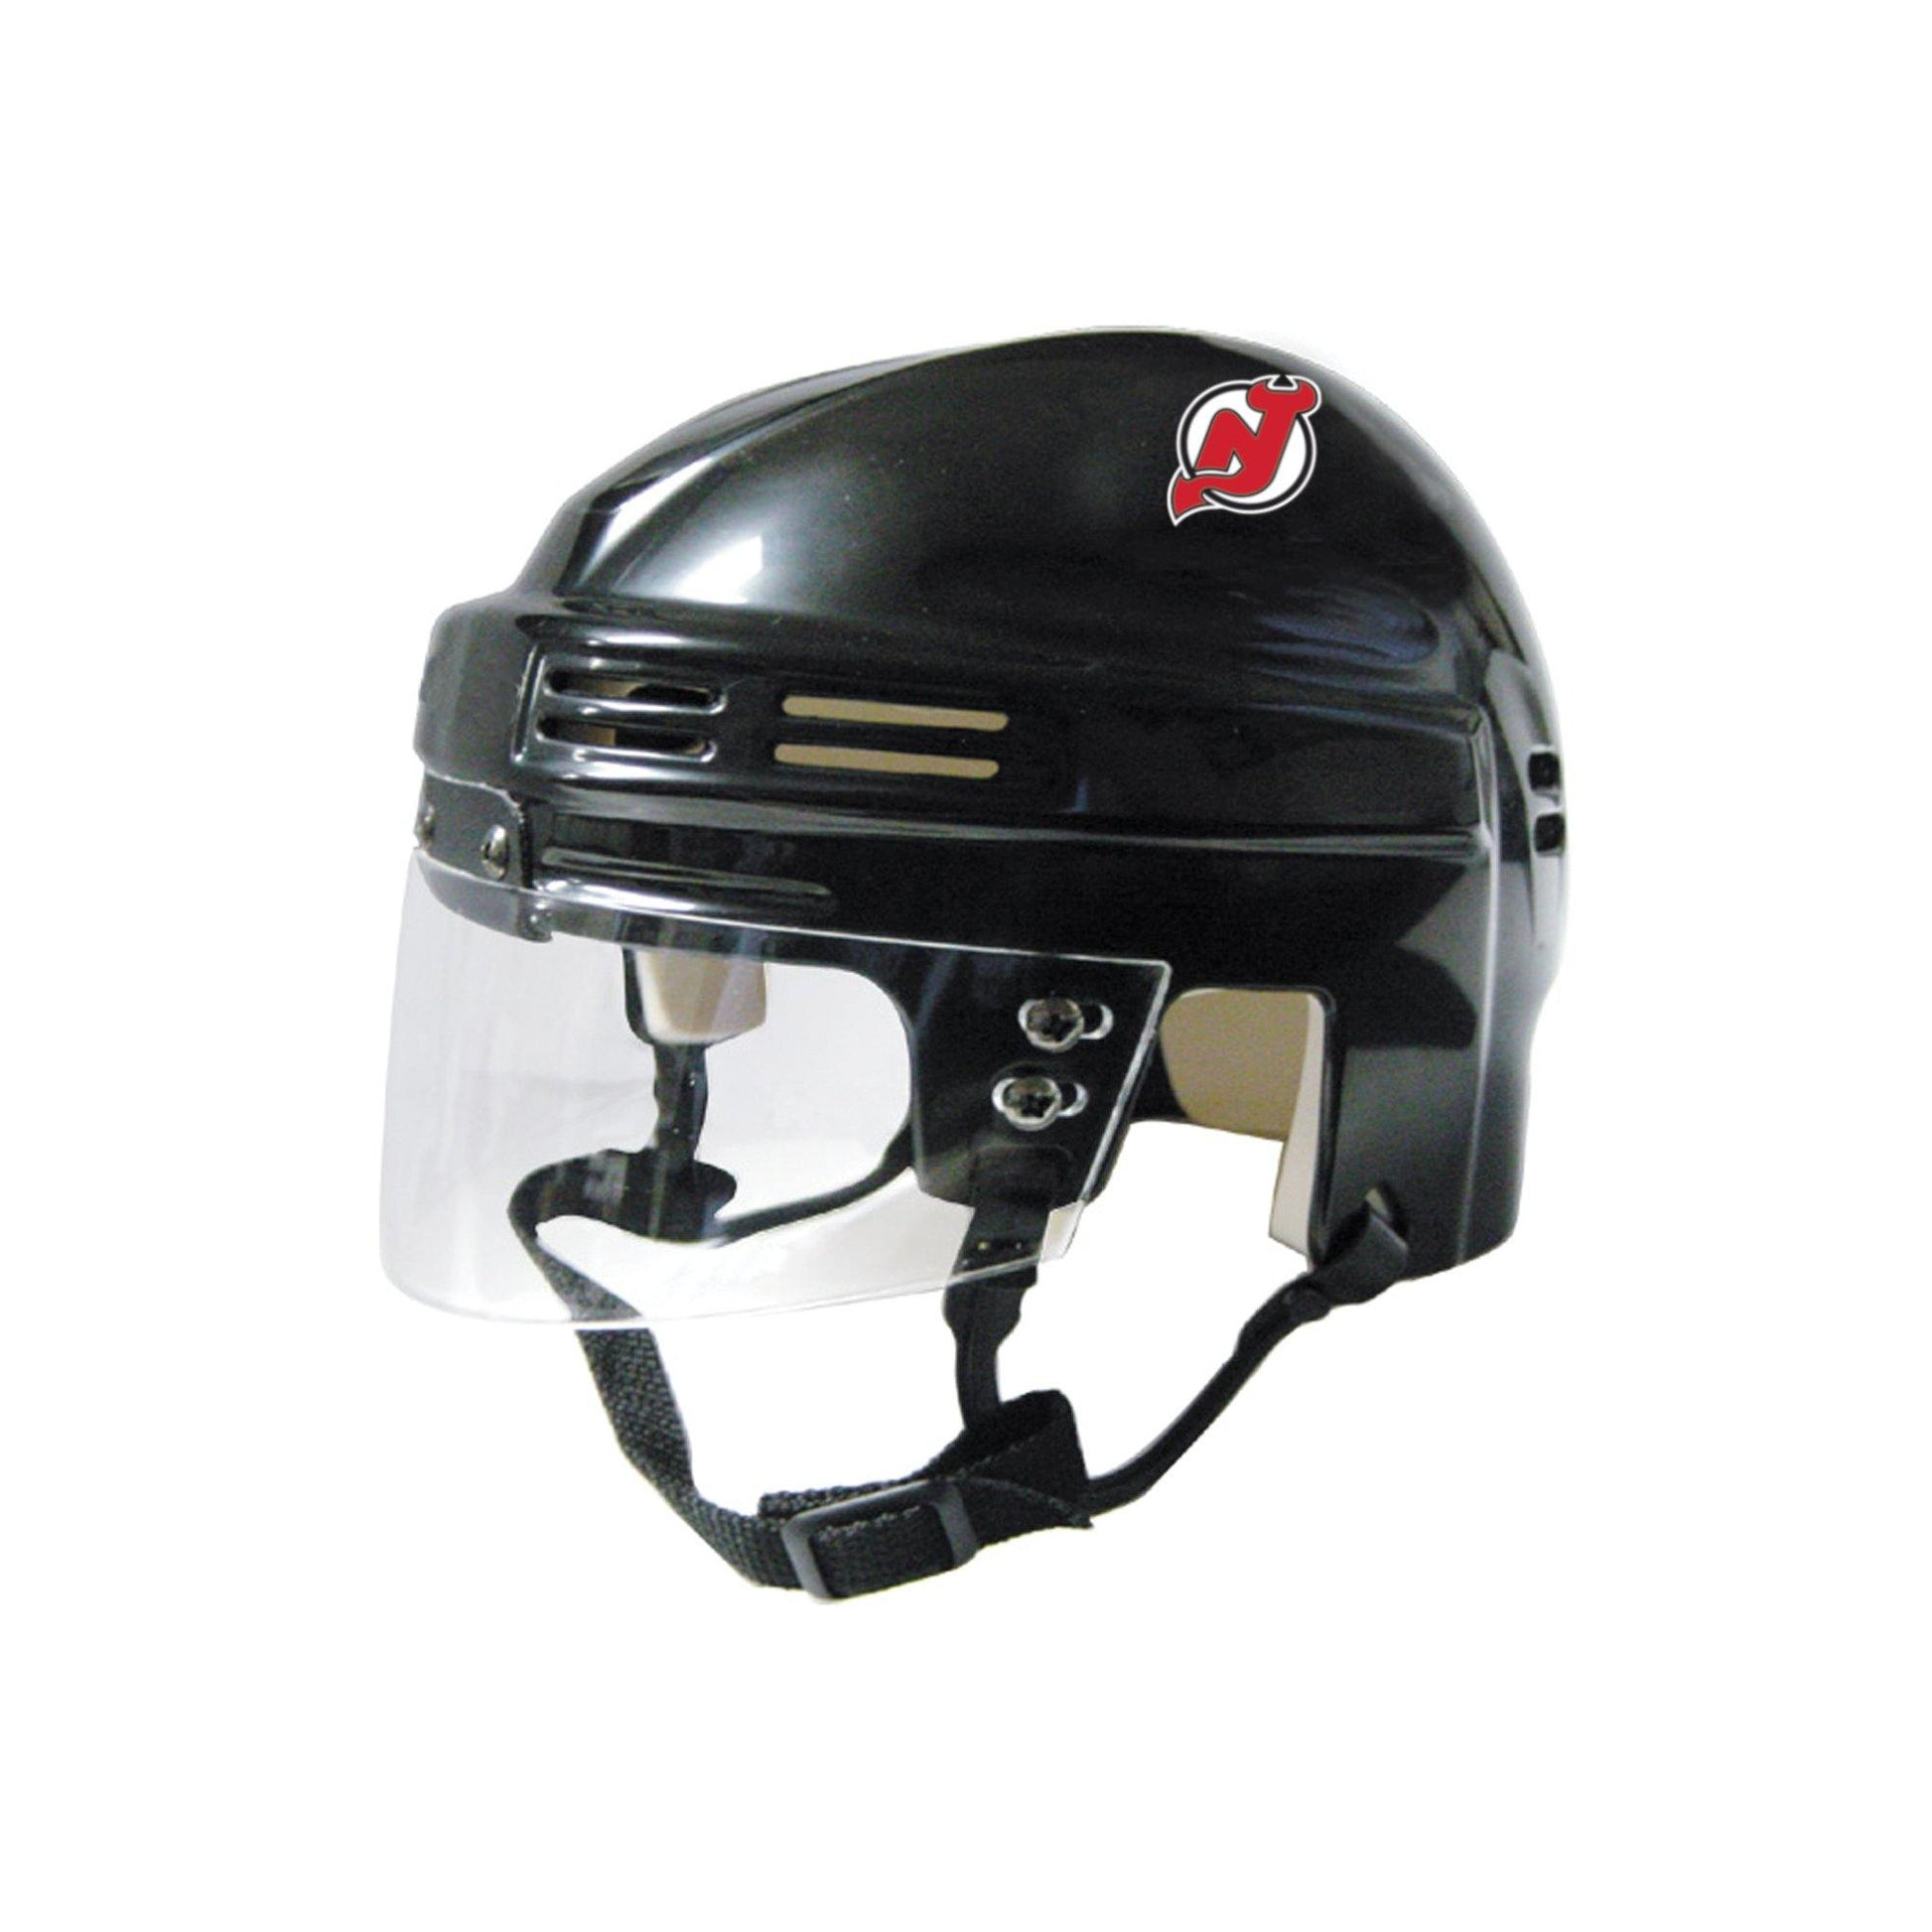 New Jersey Devils - NHL Collectible Mini Helmet - Picture Inside - FANZ Collectibles - Fanz Collectibles